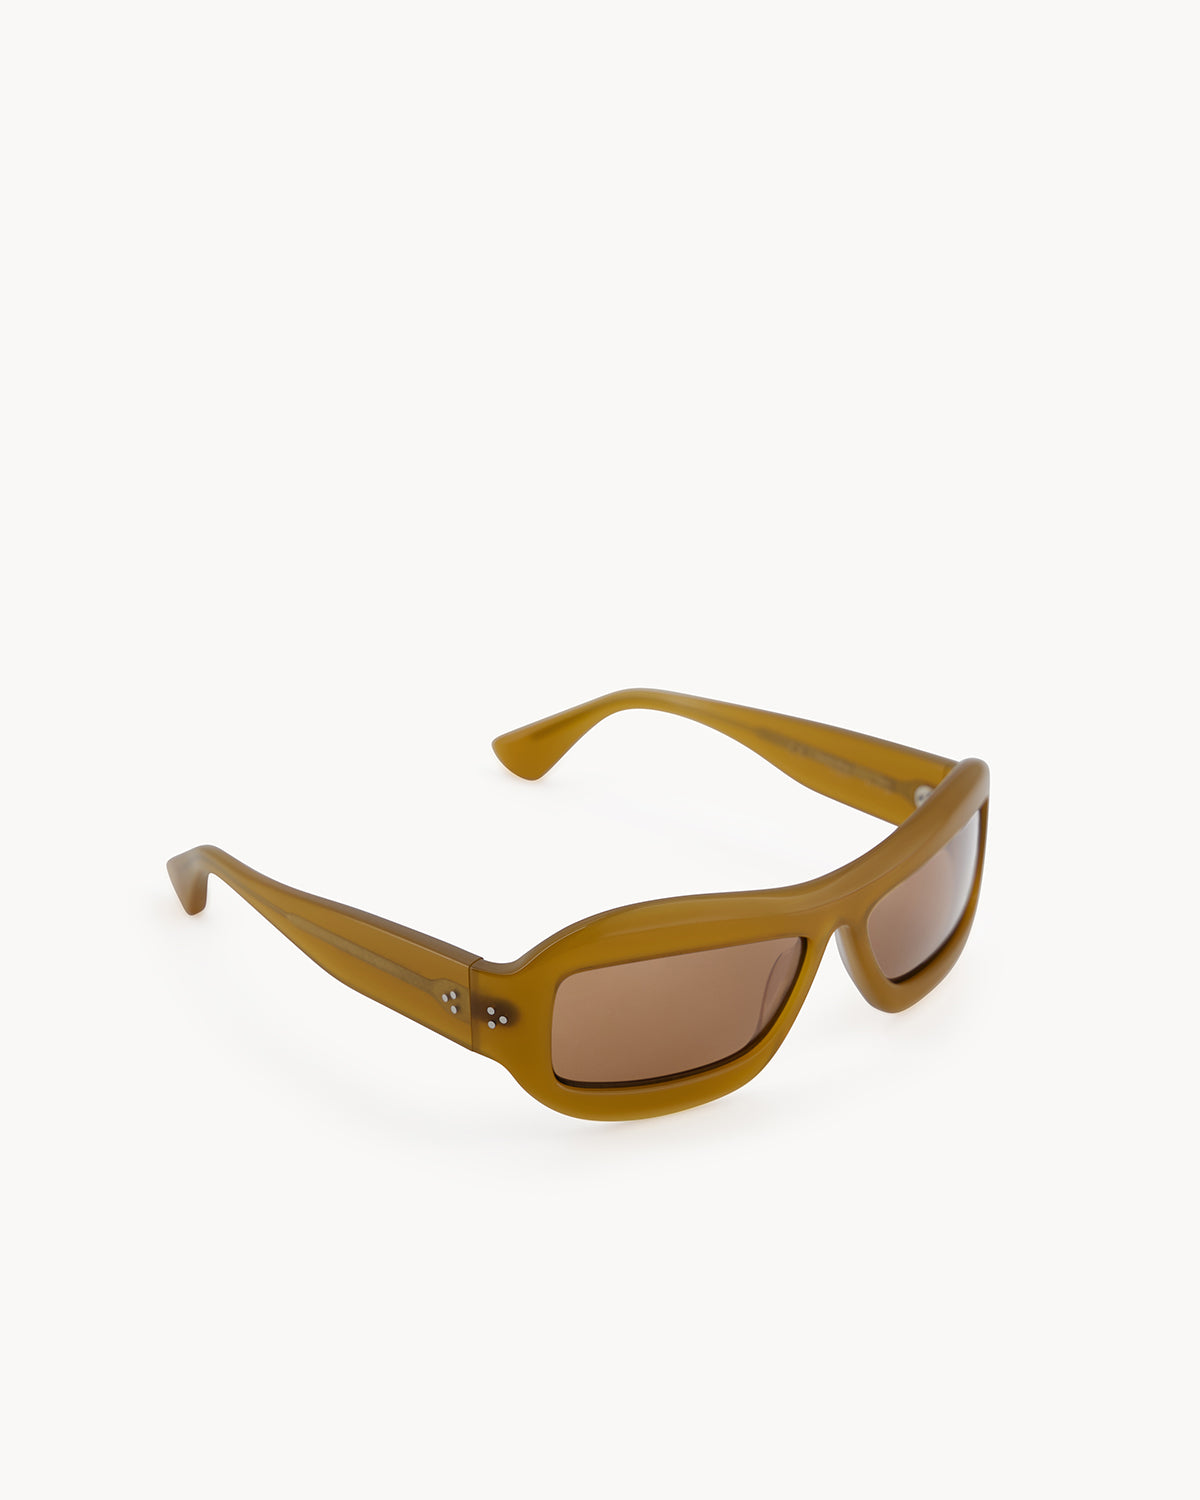 Port Tanger Zarin Sunglasses in Yellow Ochra Acetate and Tobacco Lenses 2